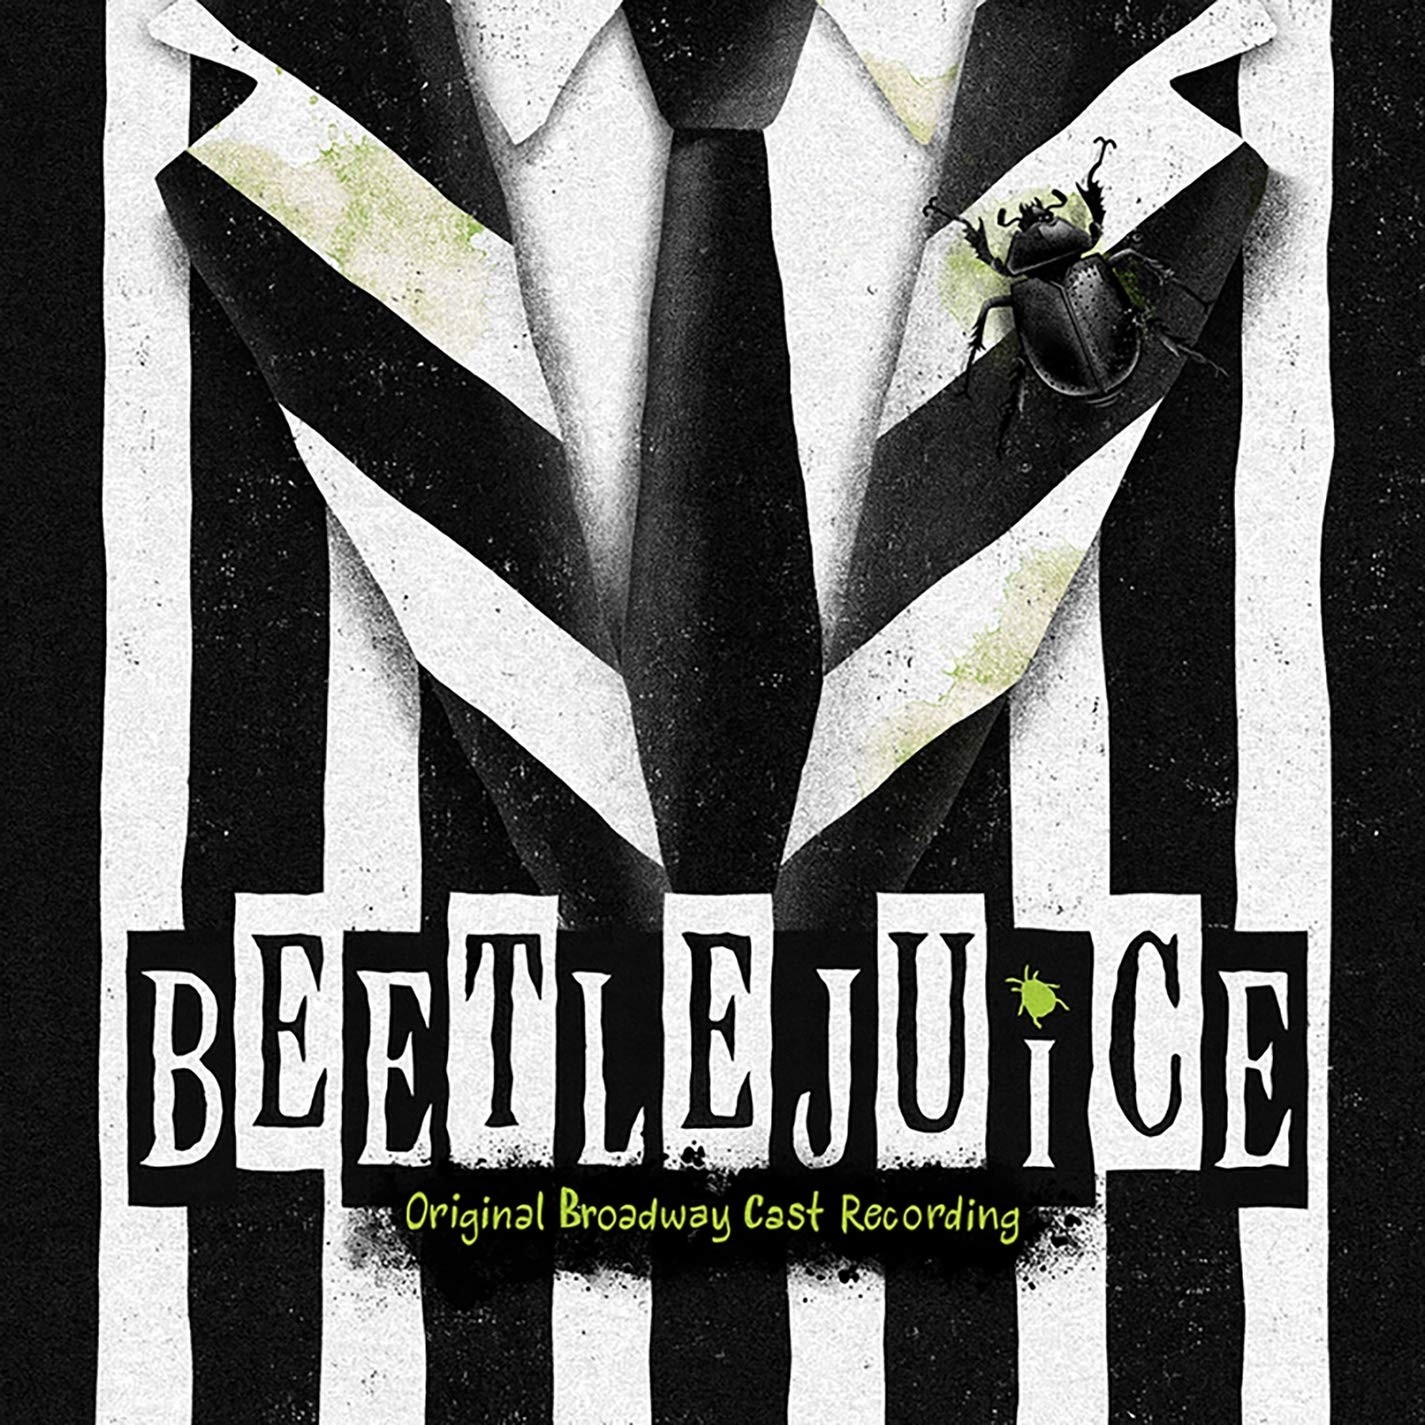 Eddie Perfect - Beetlejuice (Original Broadway Cast Recording) LP